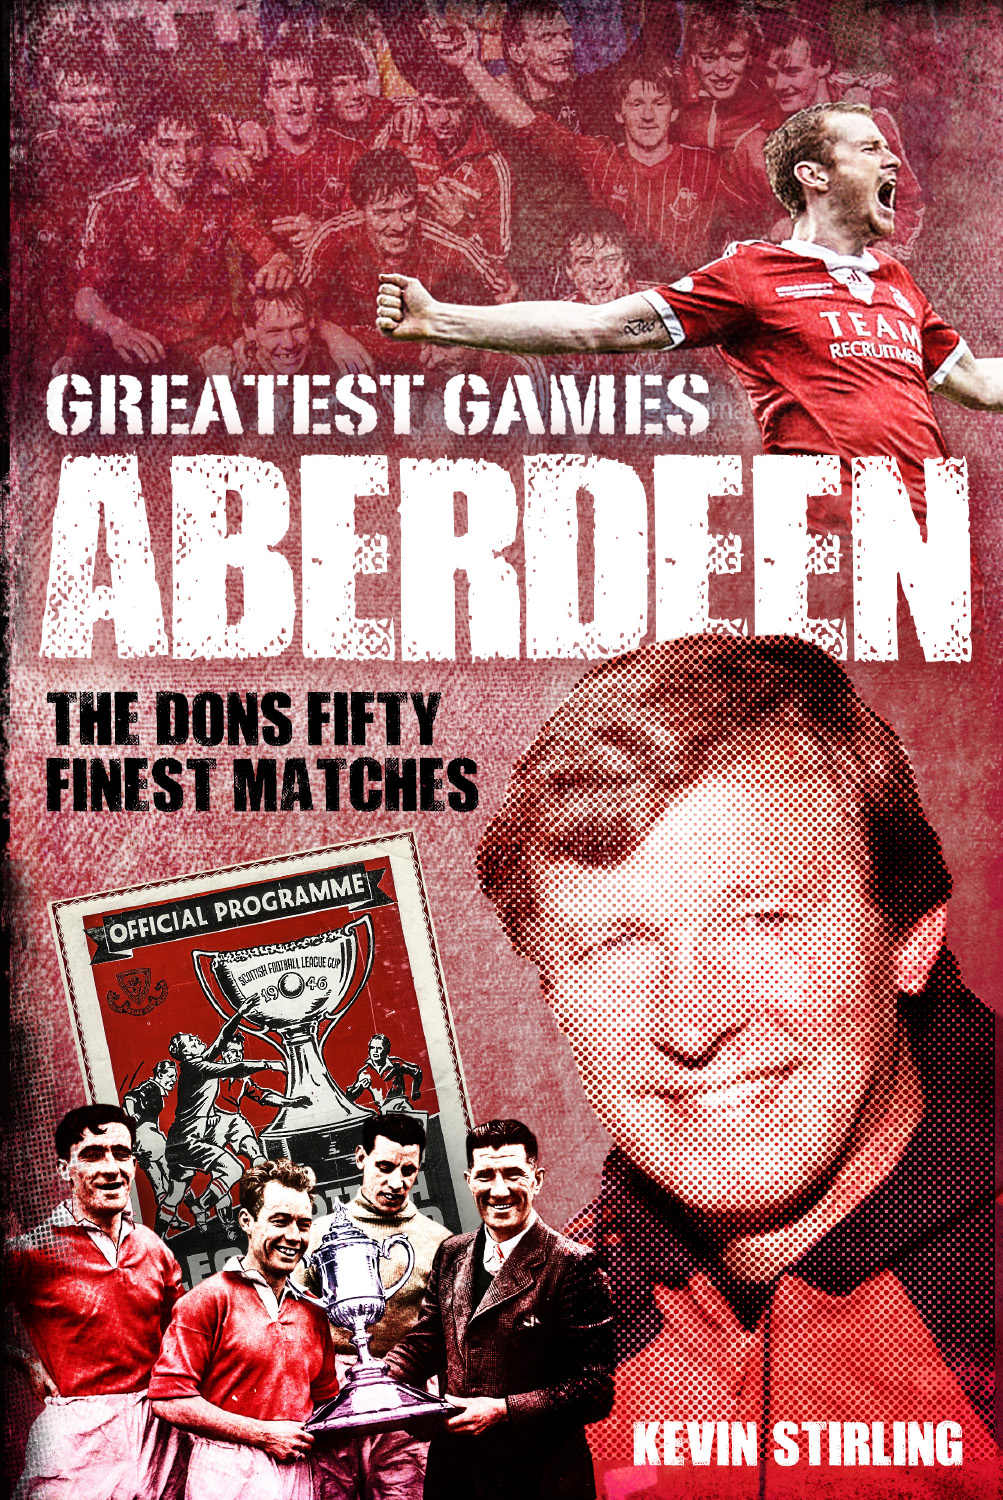 Aberdeen Greatest Games